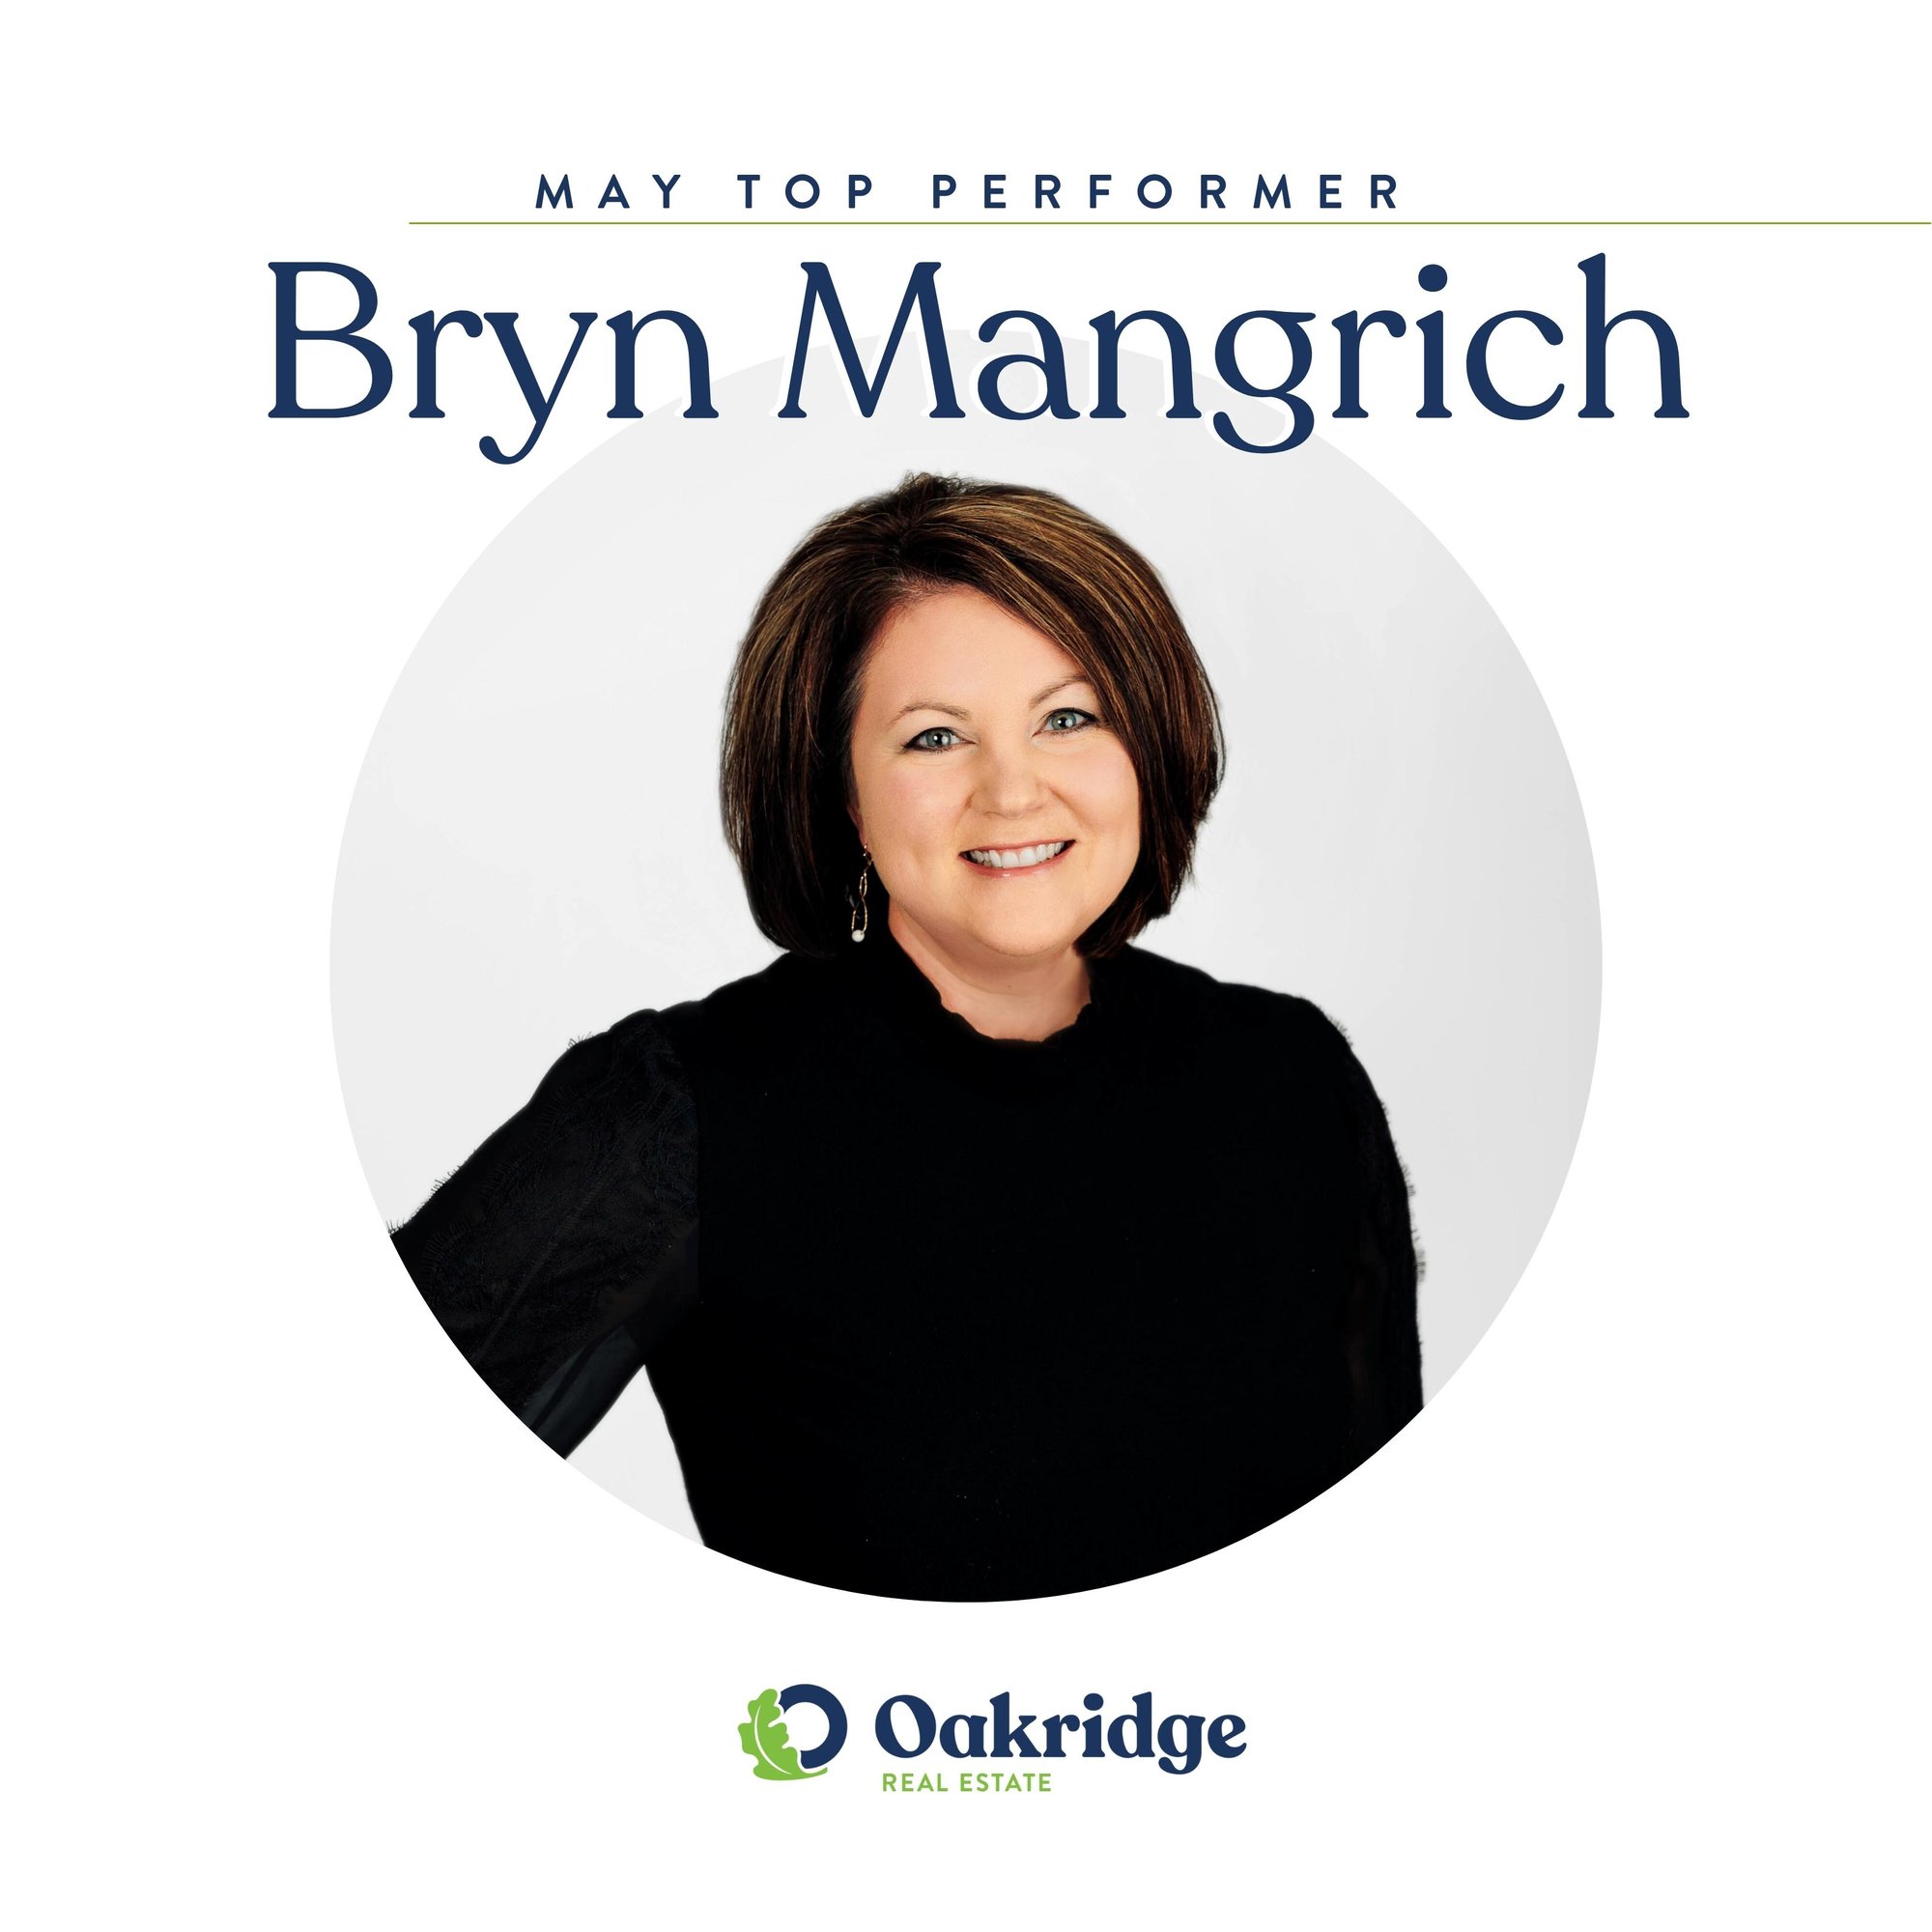 Bryn Mangrich May Top Performer Oakridge Real Estate